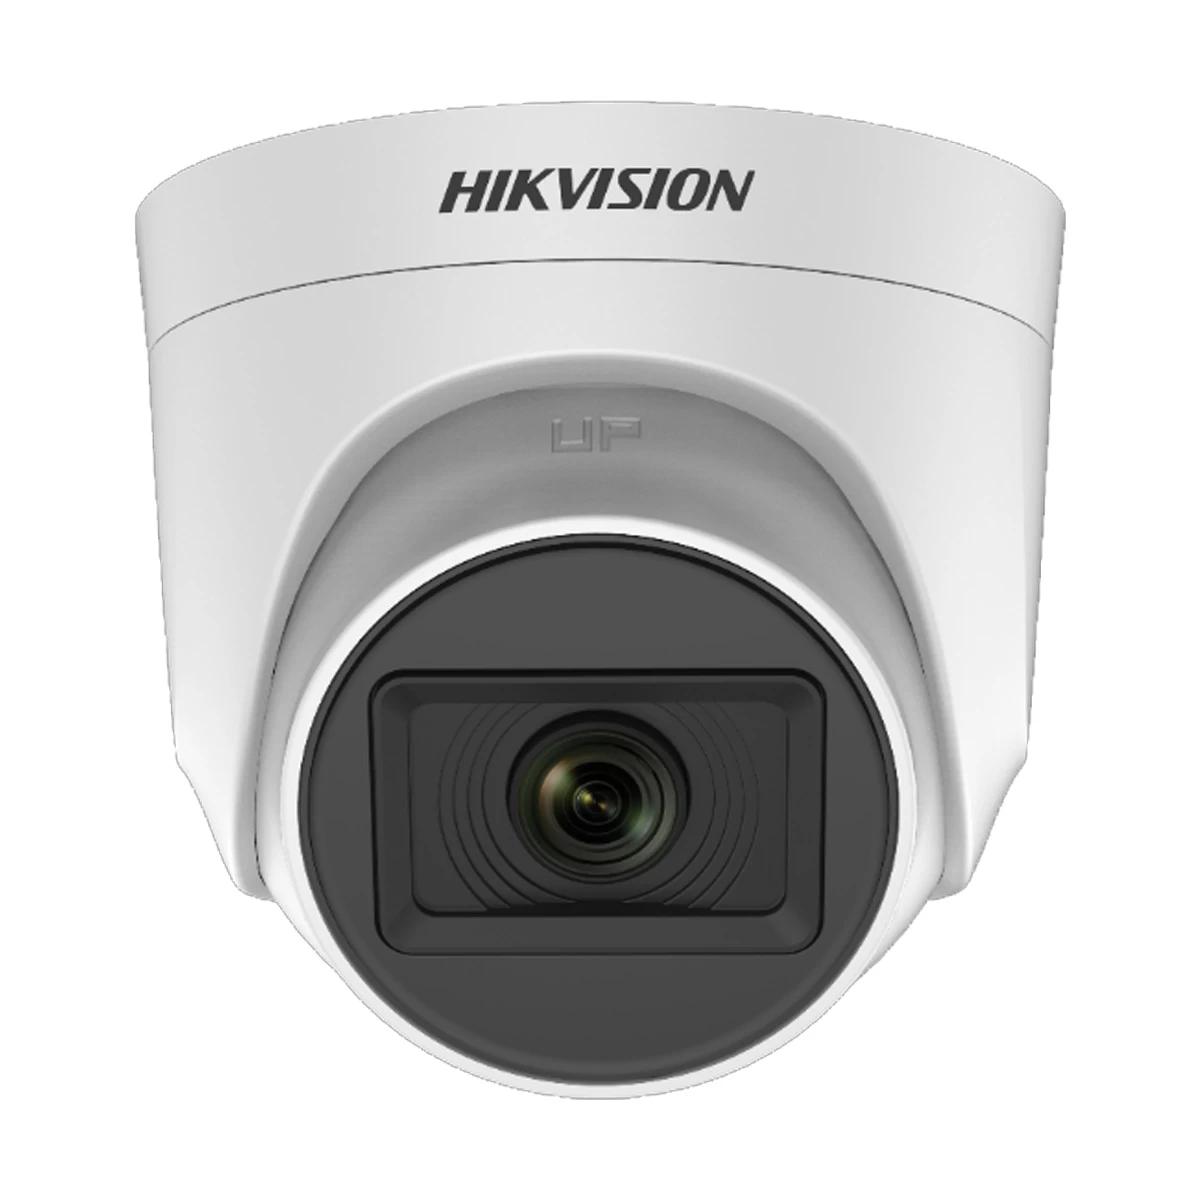 Hikvision Camera DS-2CE76H0T-ITPFS 5 MP Audio Indoor Fixed Turret